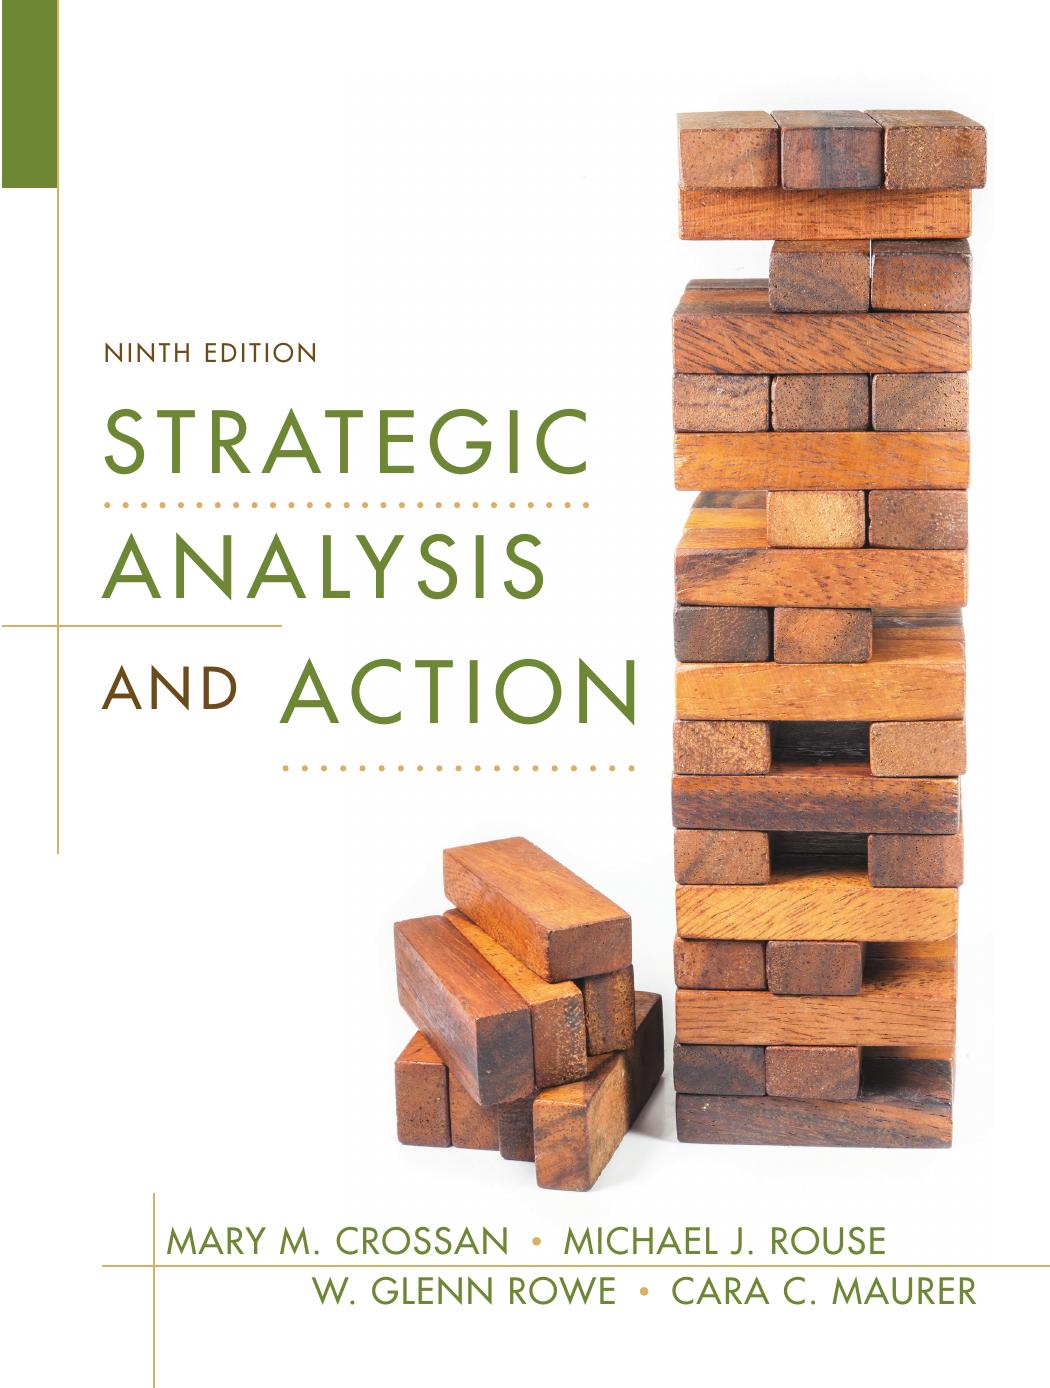 Strategic Analysis and Action 9th - Mary M. Crossan & Michael J. Rouse & W. Glenn Rowe & Cara C. Maurer.jpg